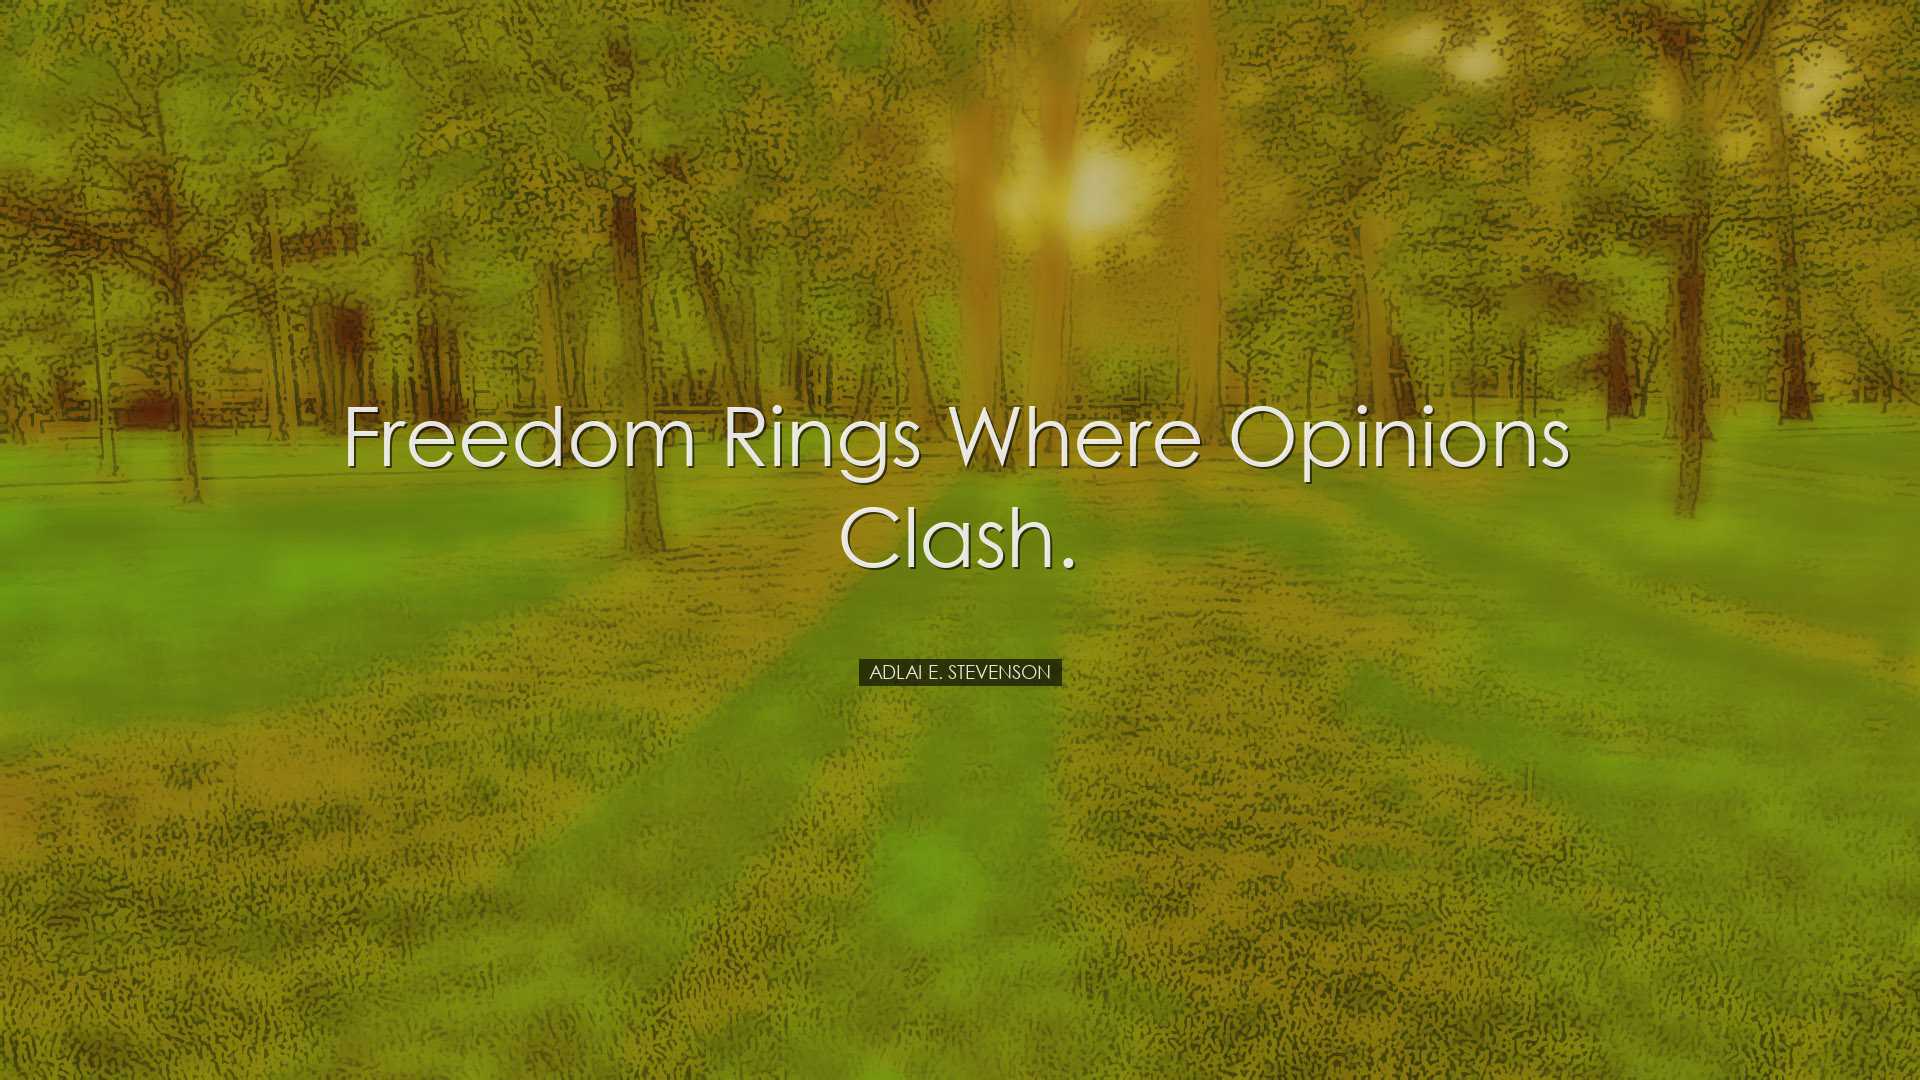 Freedom rings where opinions clash. - Adlai E. Stevenson